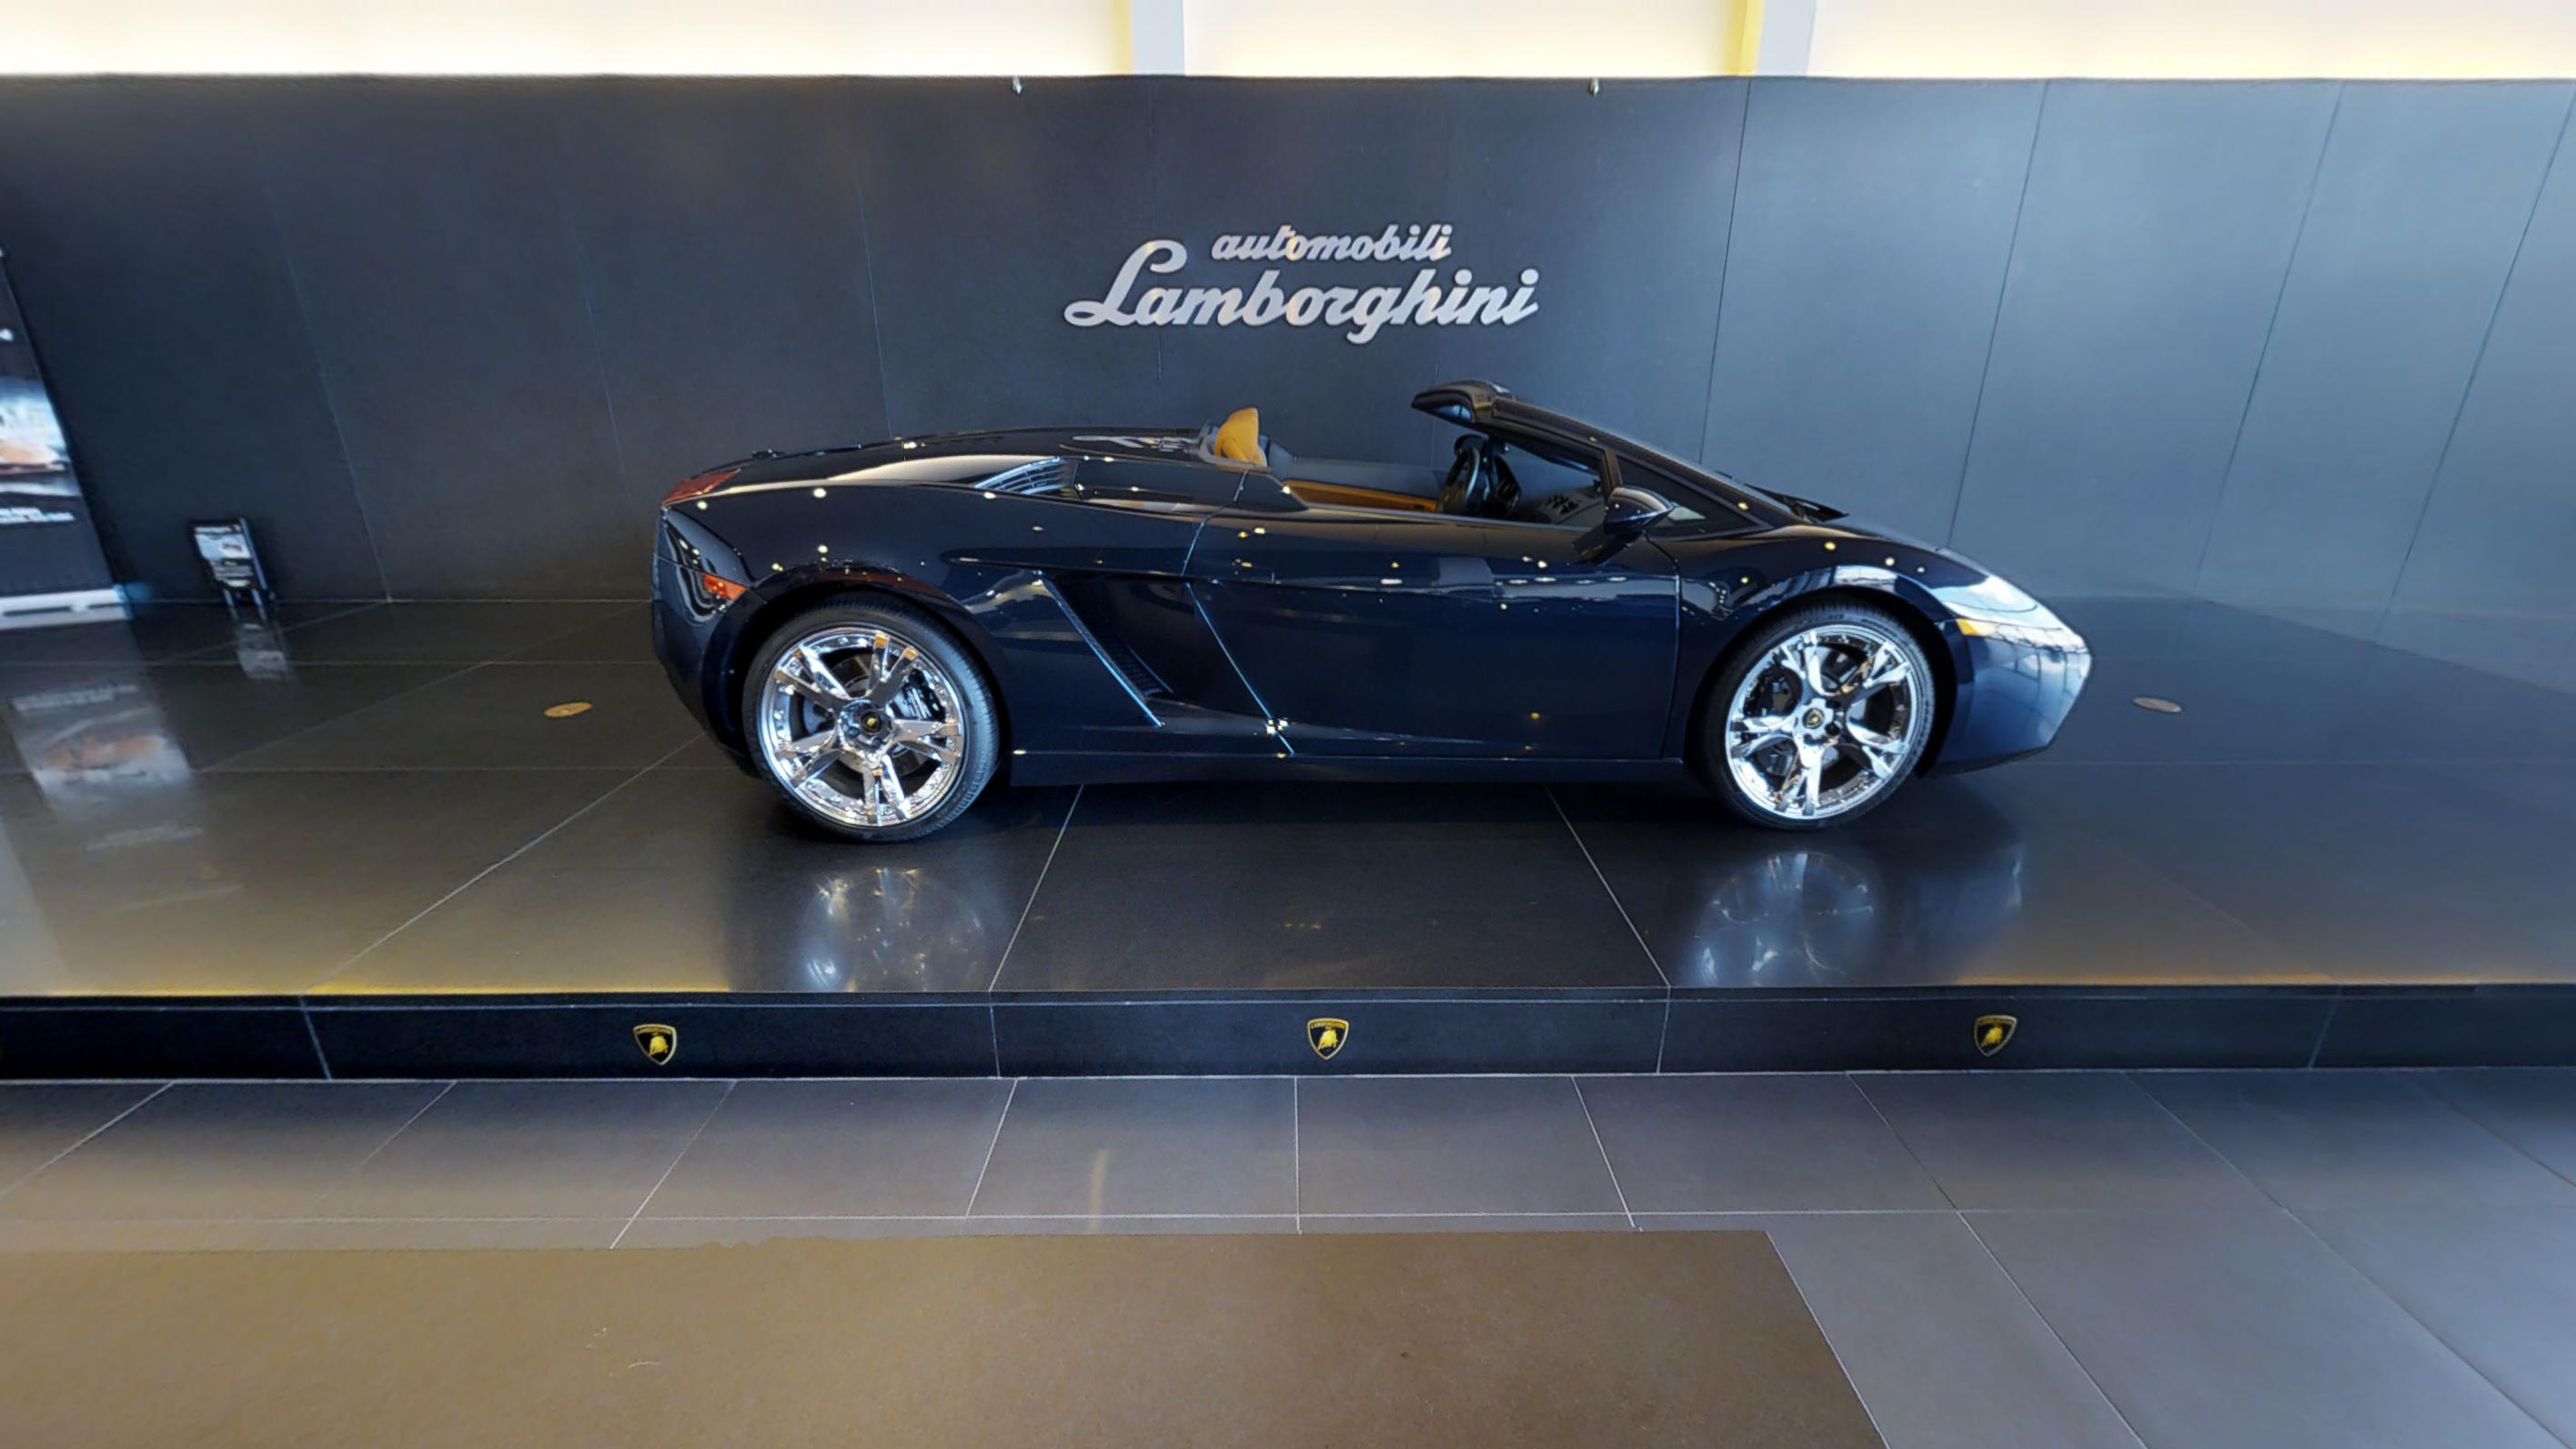 Suburban Lamborghini